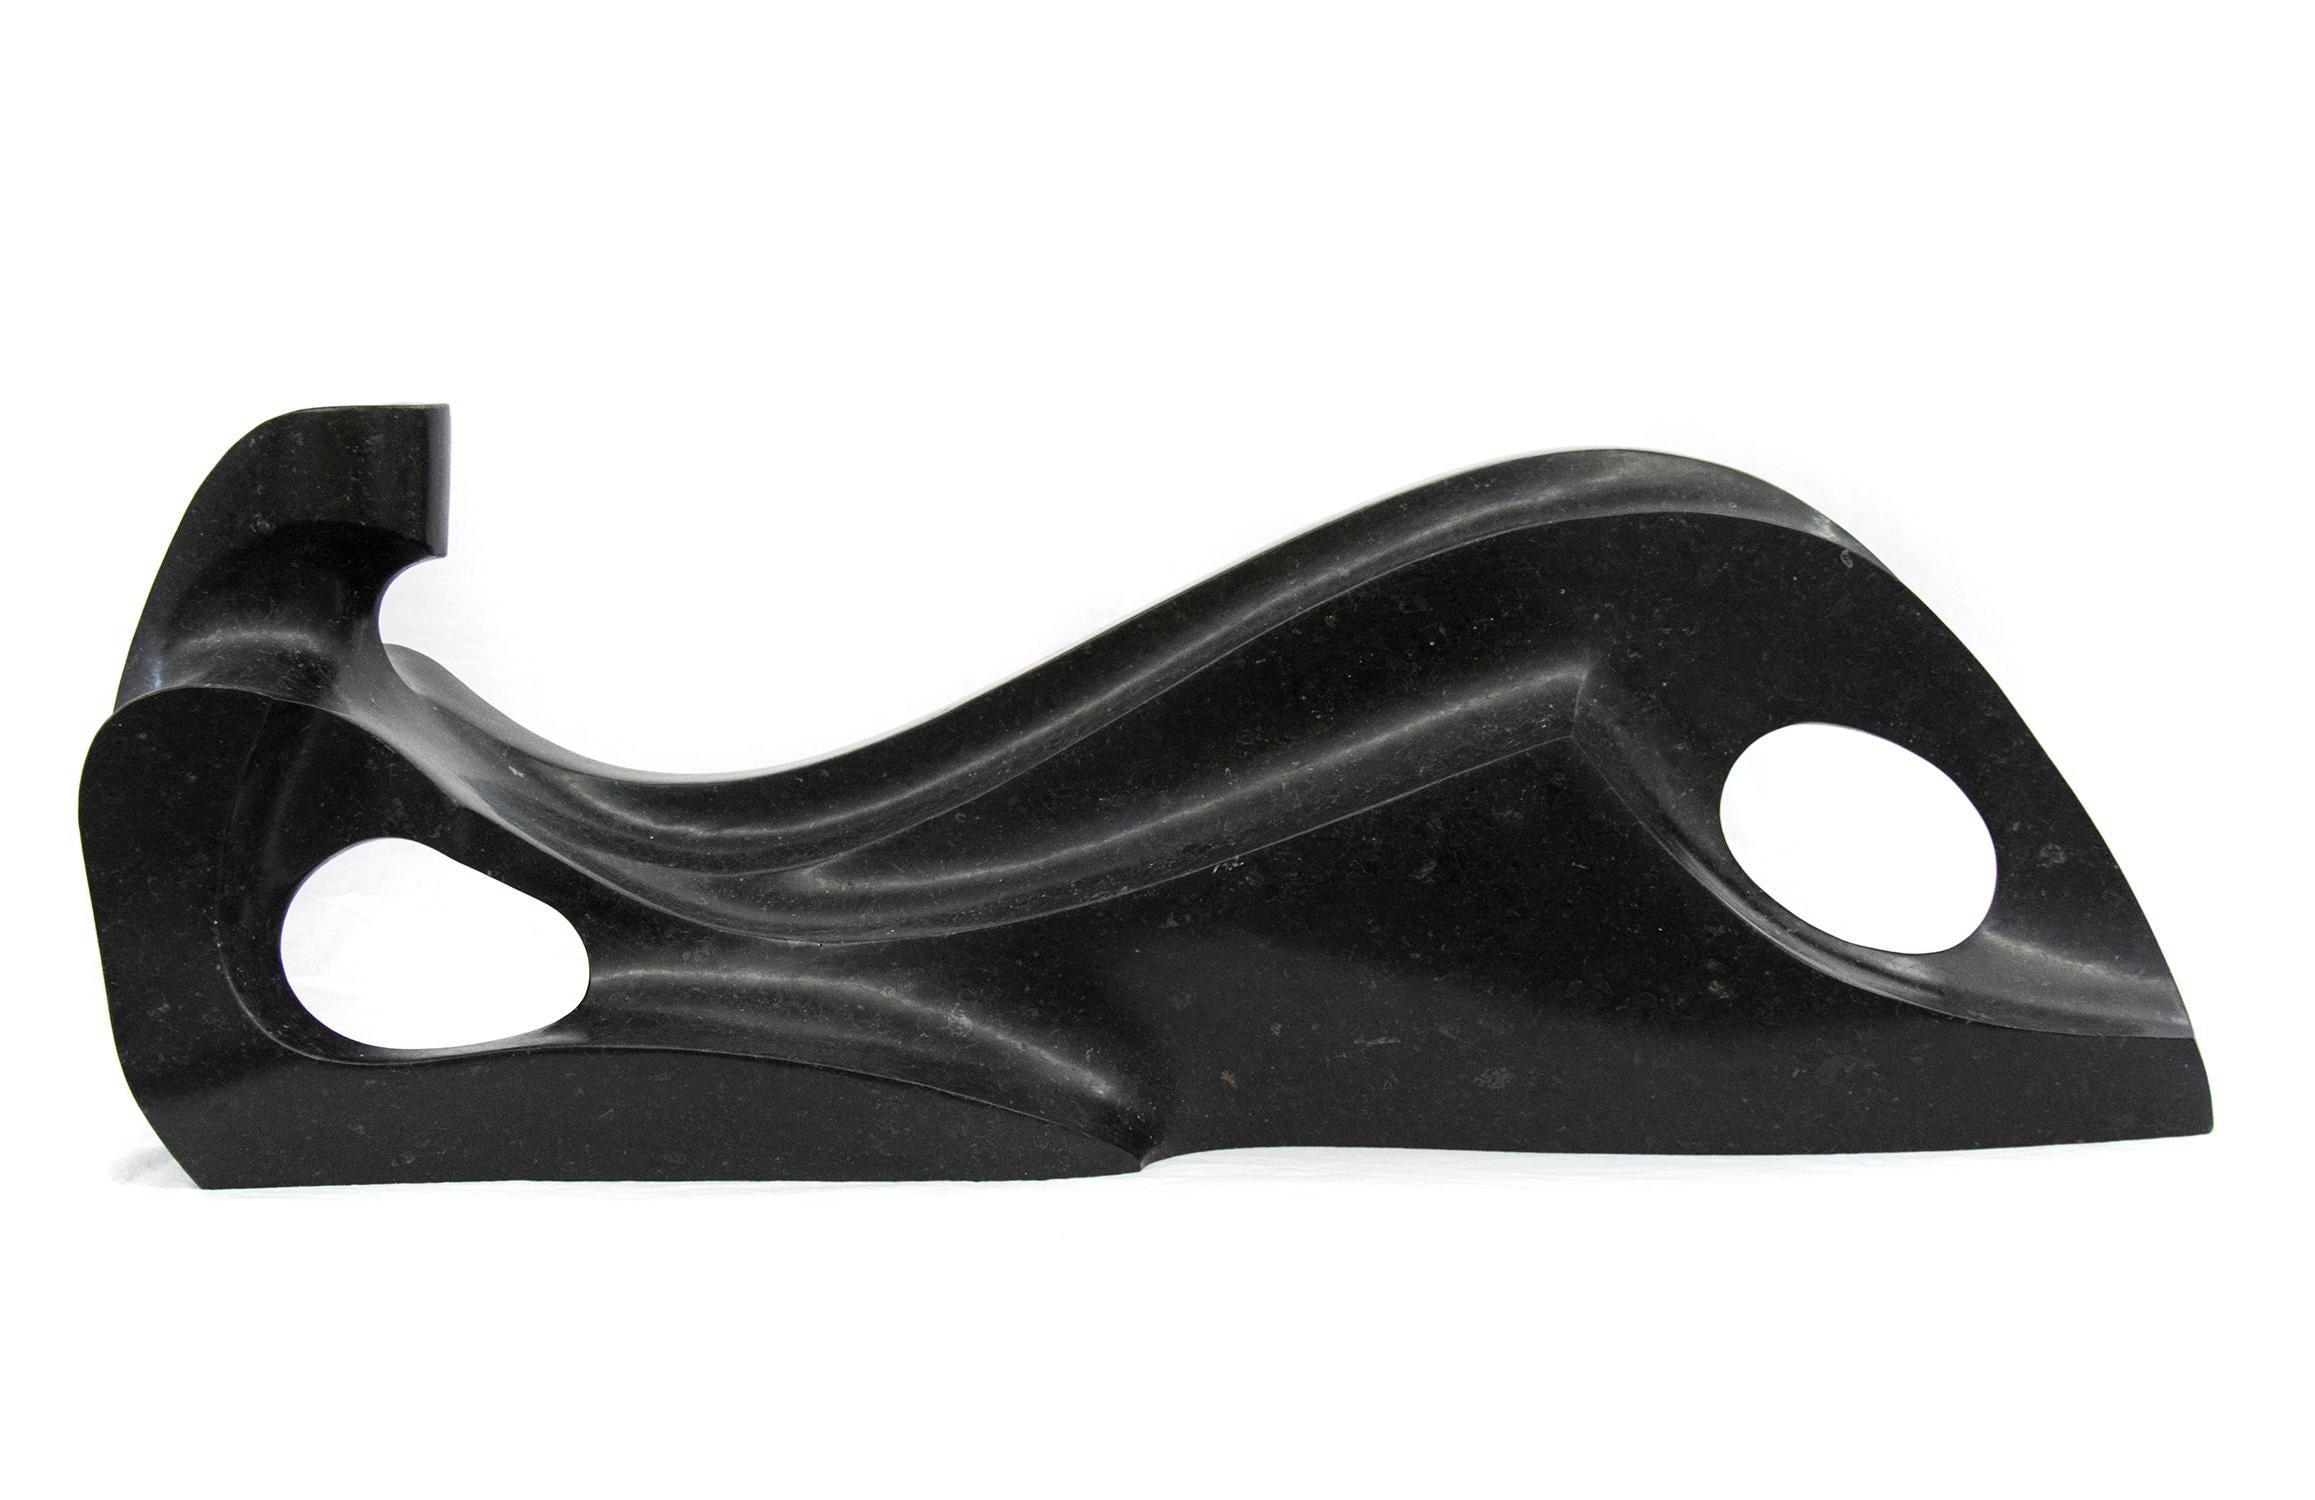 Celeste 2/50 - smooth, figurative, engineered black granite, tabletop sculpture - Sculpture by Jeremy Guy